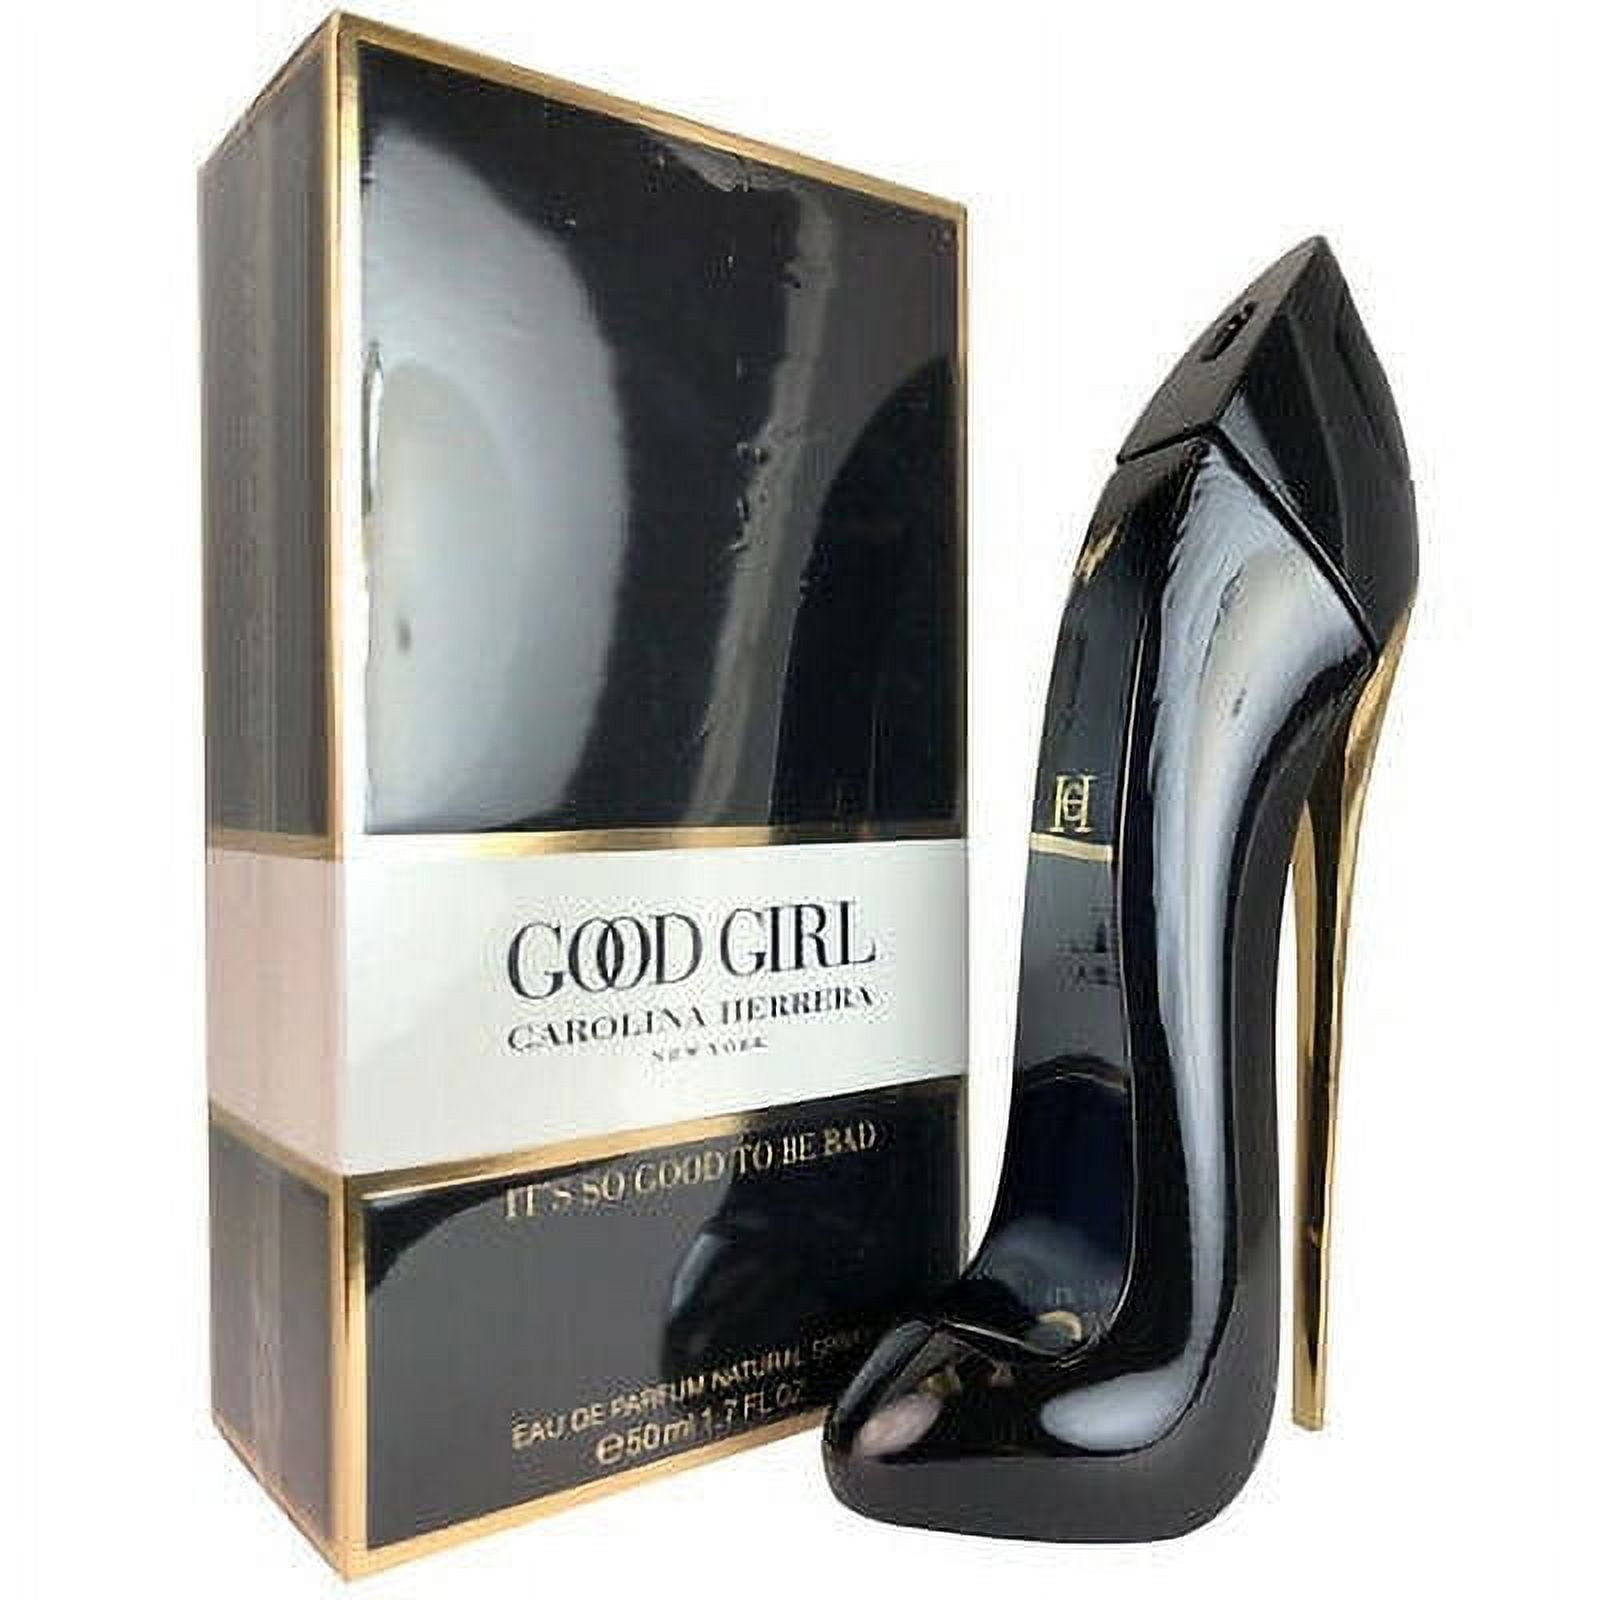 Good Girl For Women by Carolina Herrera 1.7 oz Eau De Parfum Spray ...